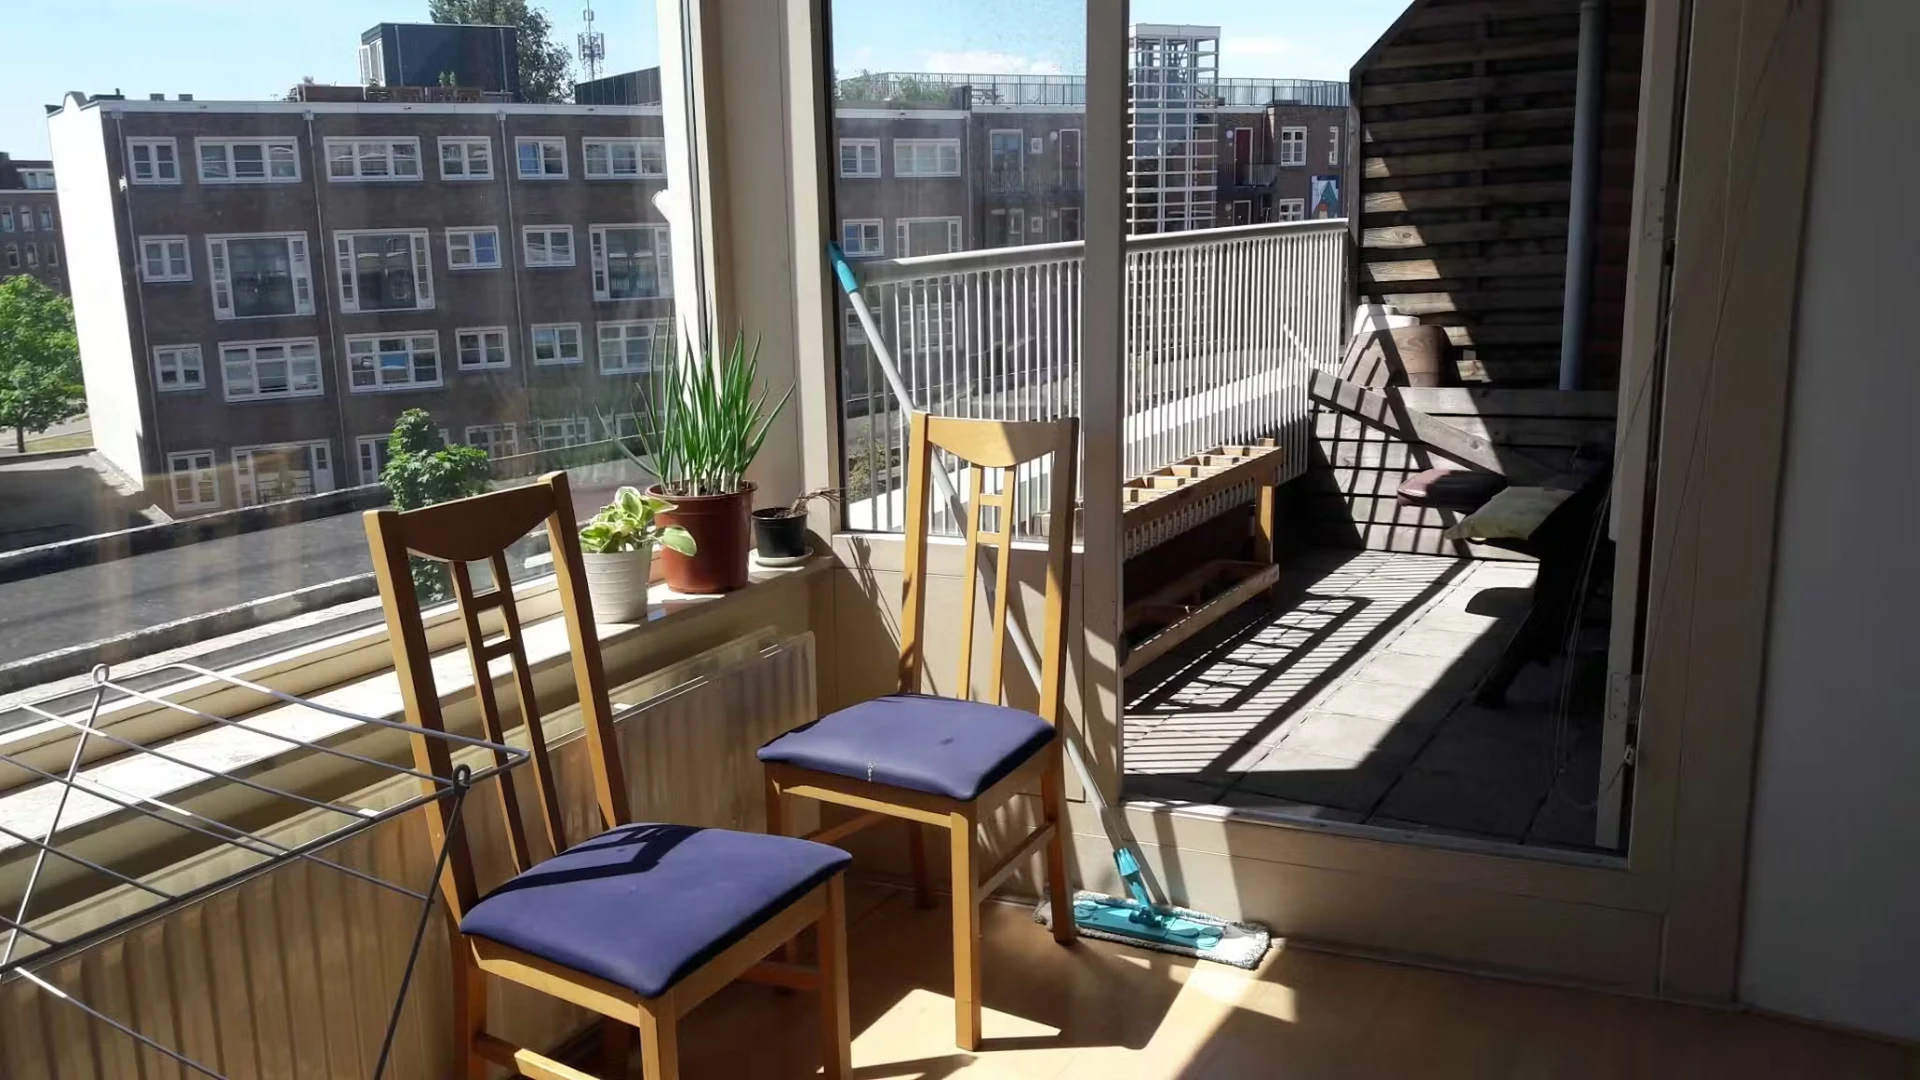 Shared room in 3-bedroom flat Rotterdam